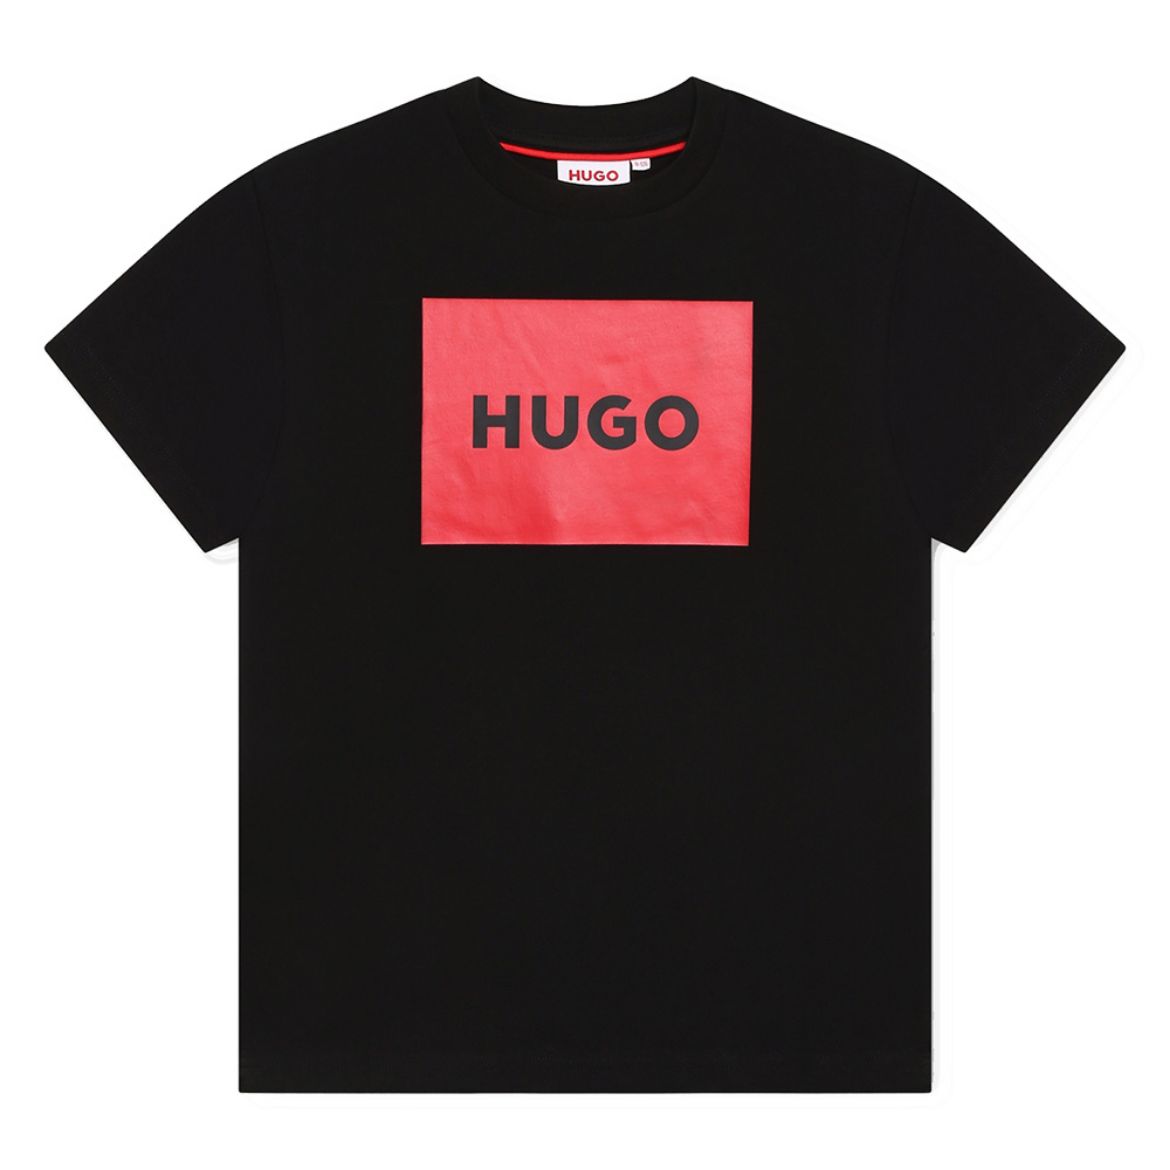 Picture of Hugo Boys Black T-shirt